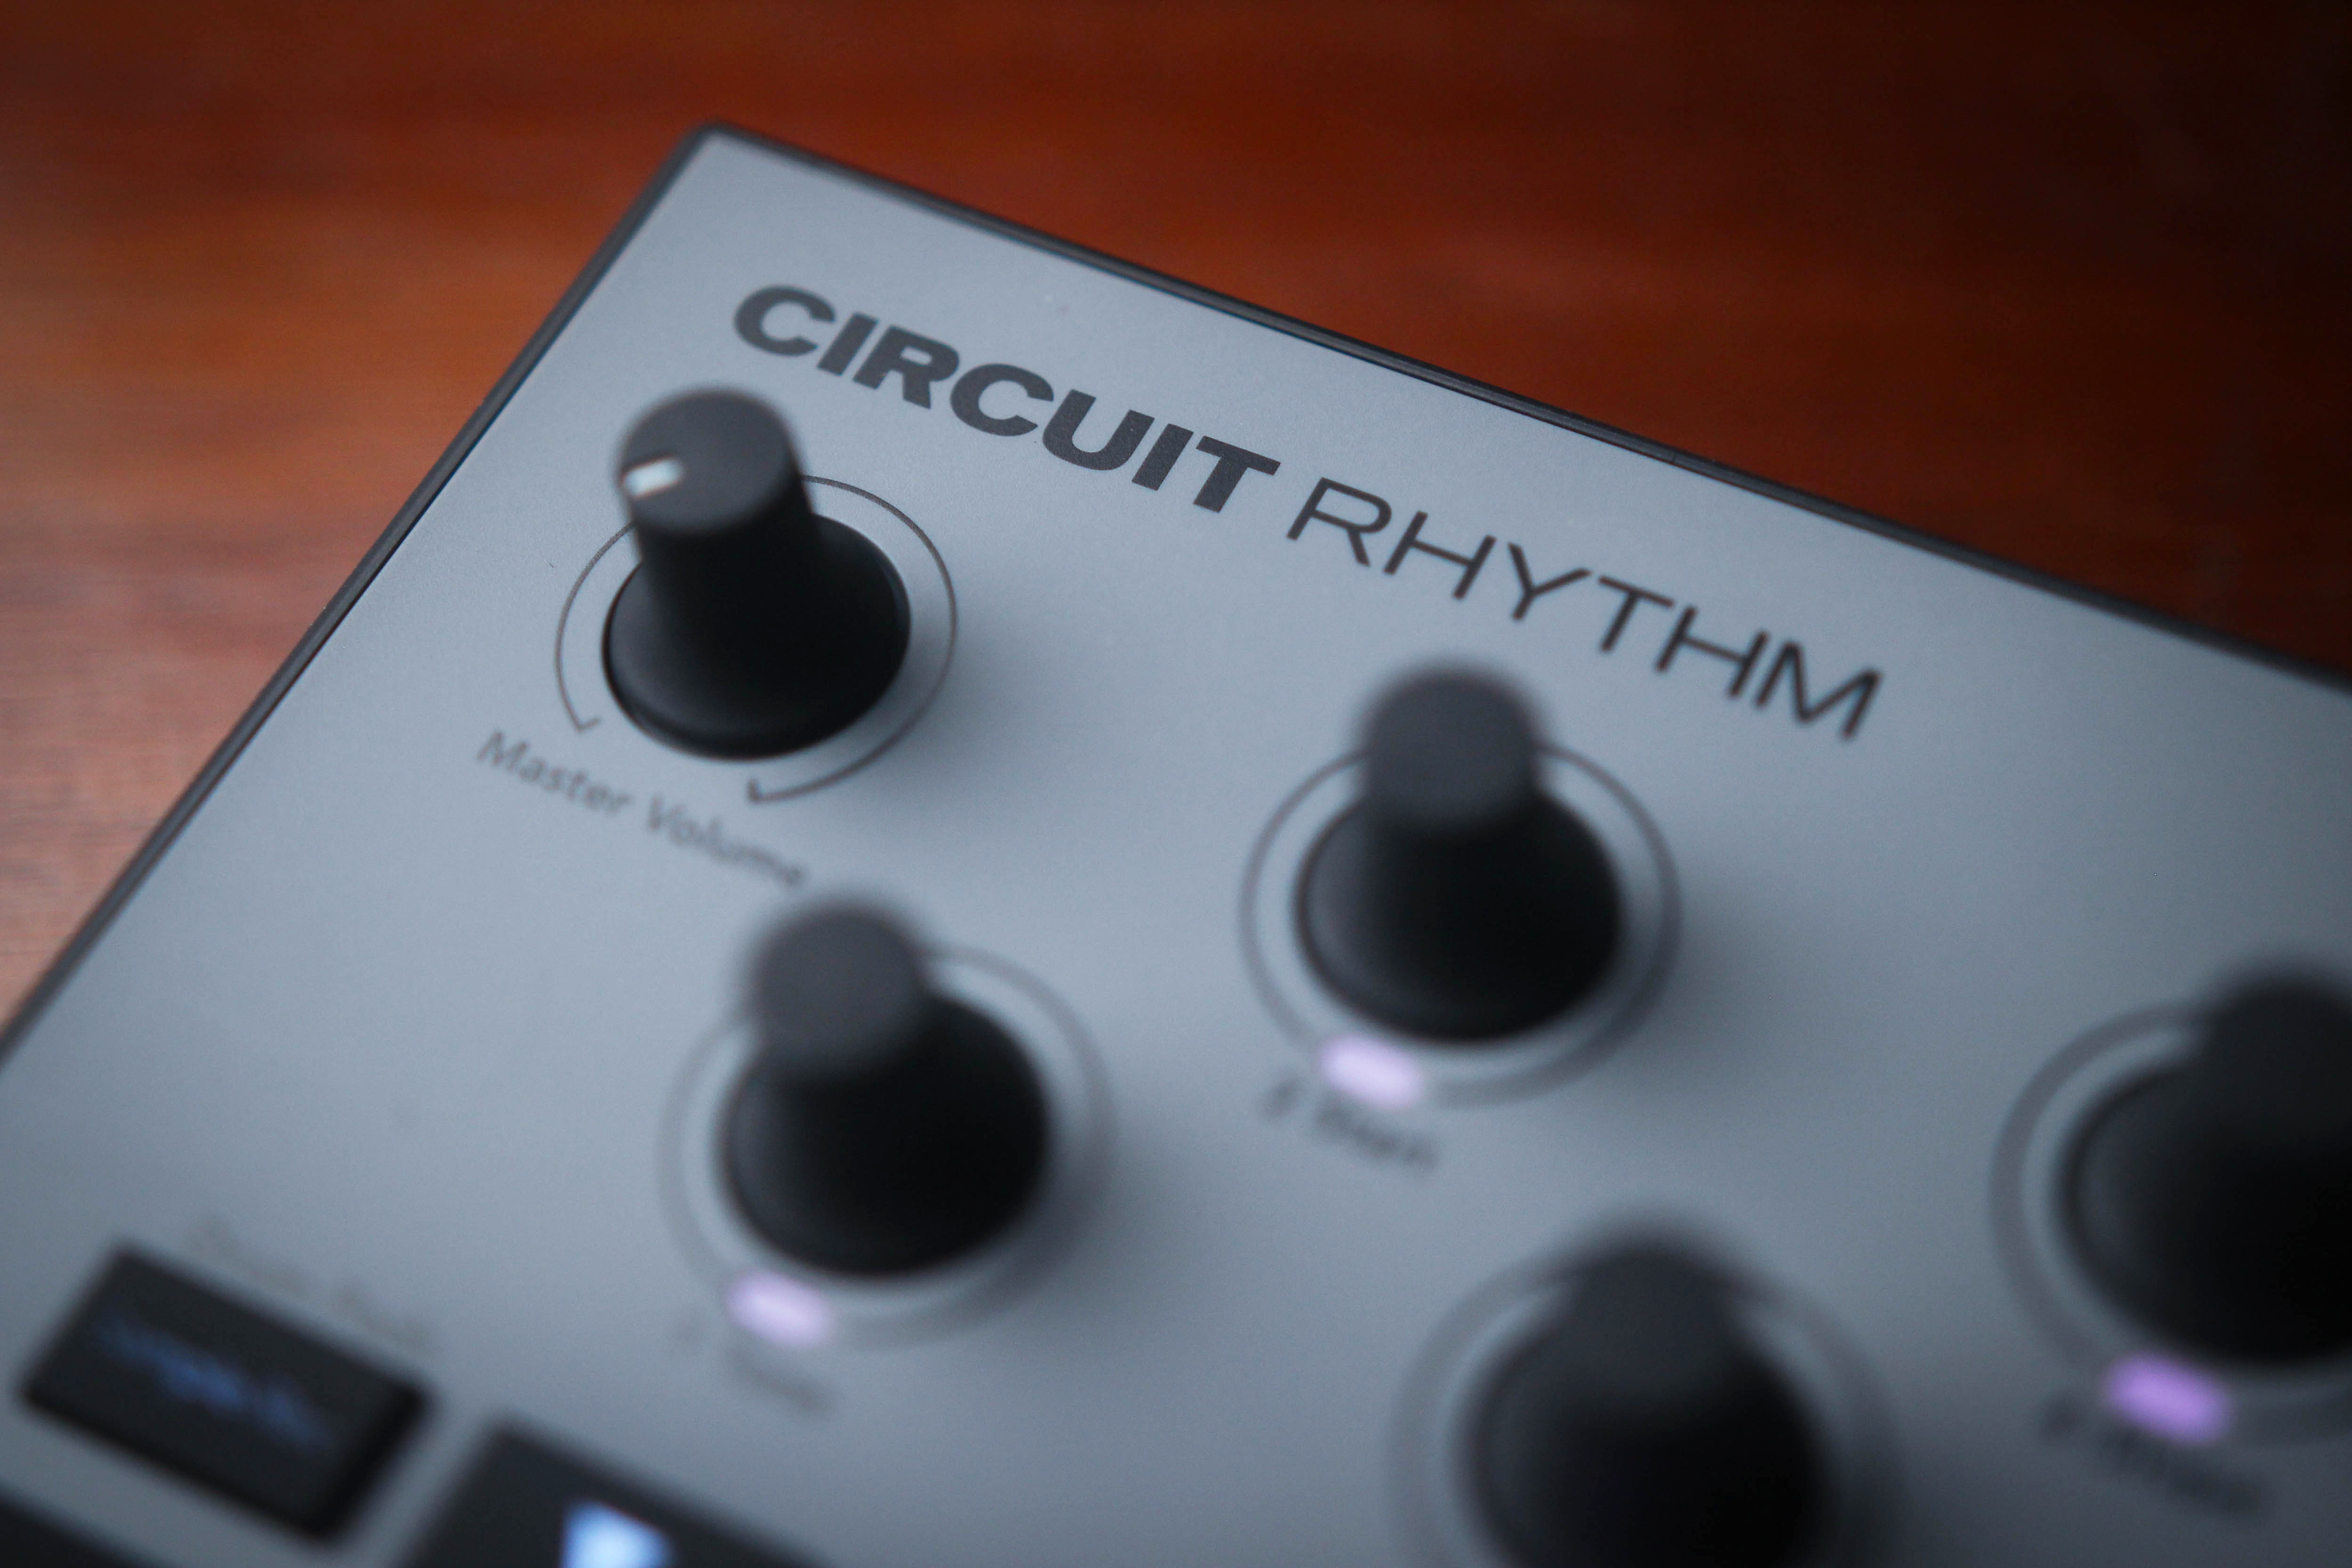 Novation Circuit Rhythm